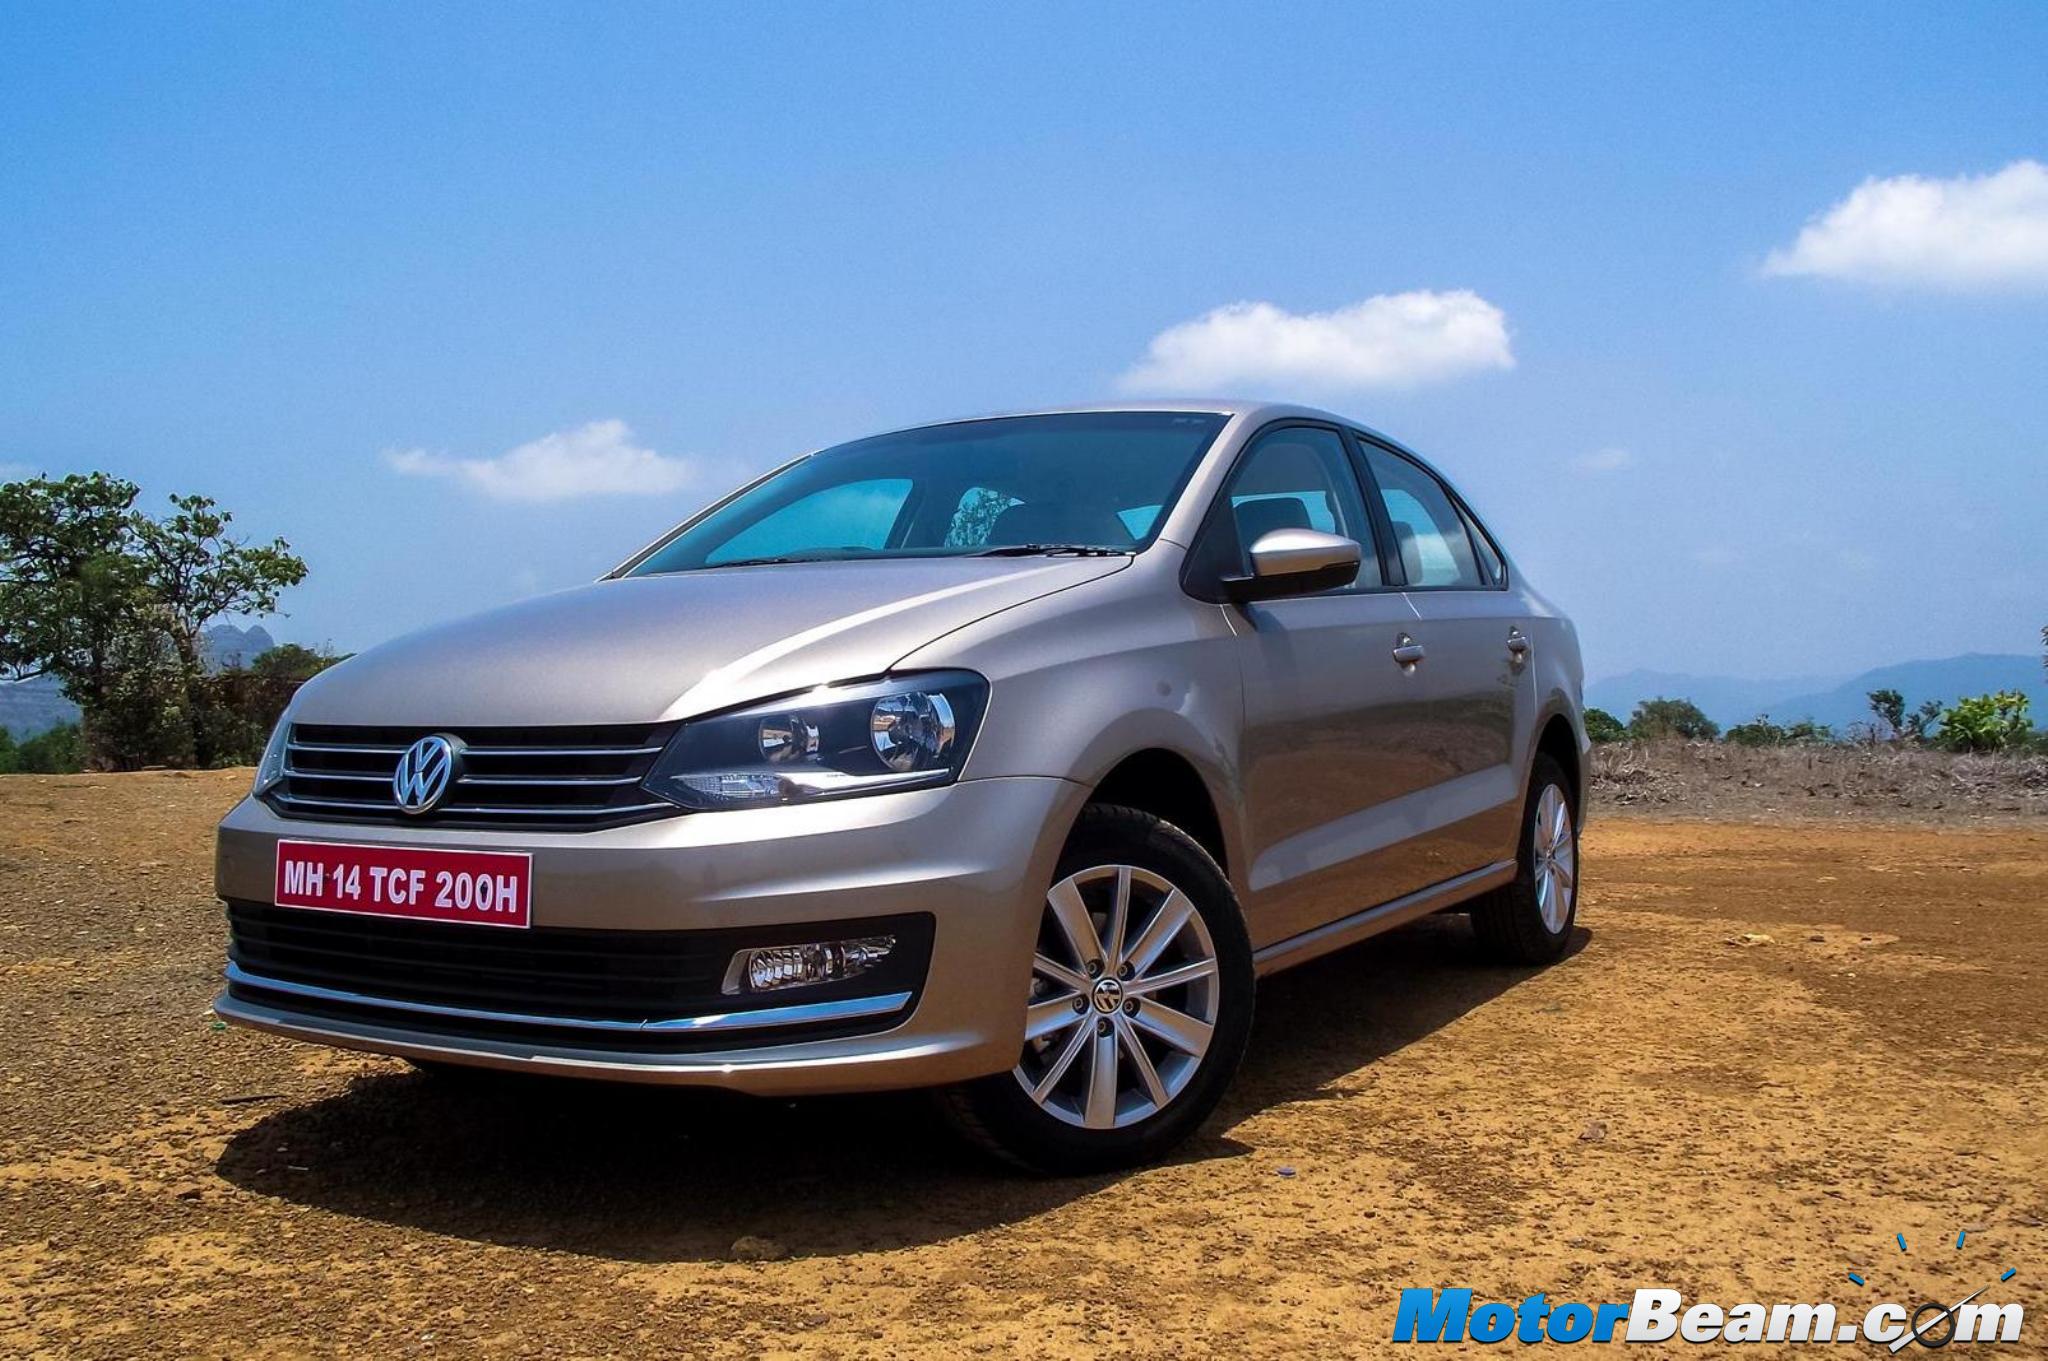 2015 Volkswagen Vento Facelift Test Drive Review